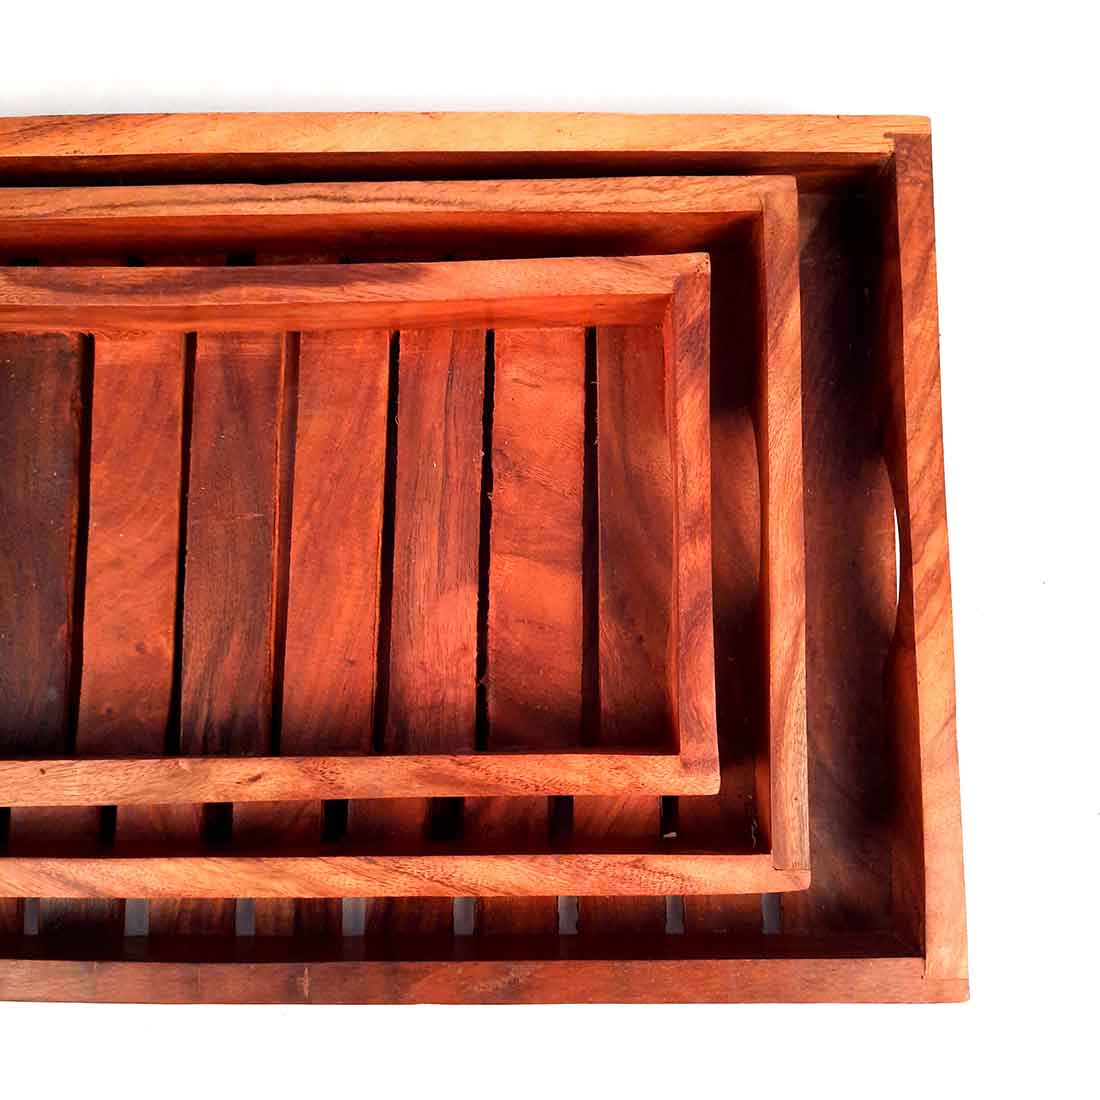 Wooden Tray Set - Decorative Trays for Wedding - 15 Inch-Set of 3 - ApkaMart